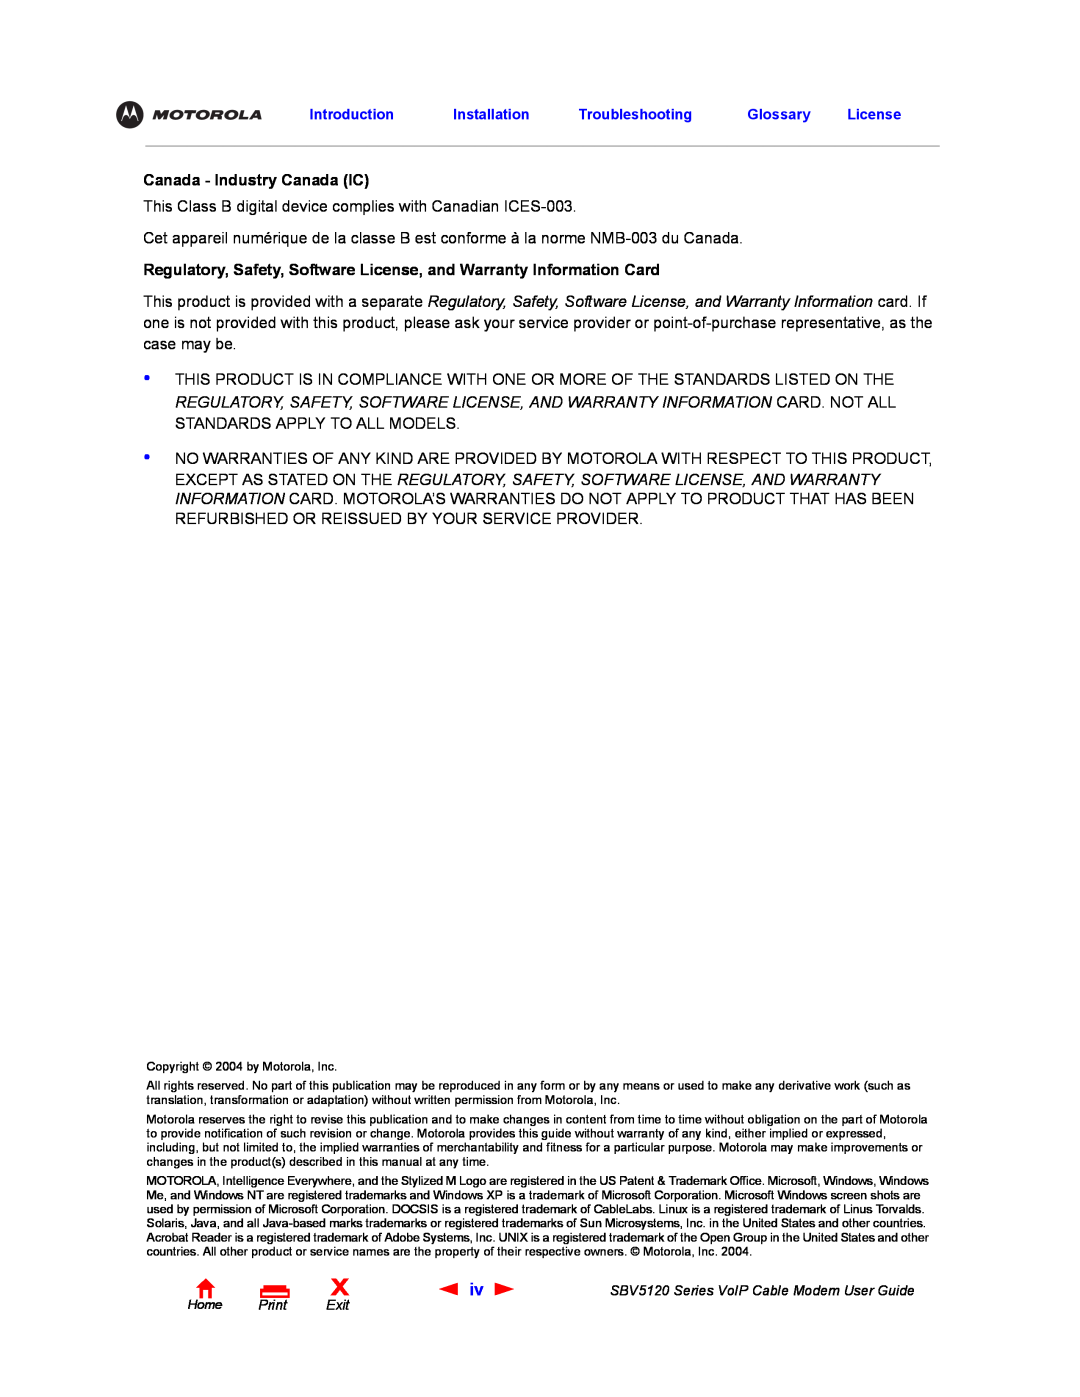 Motorola SBV5120 manual Canada - Industry Canada IC, Regulatory, Safety, Software License, and Warranty Information Card 